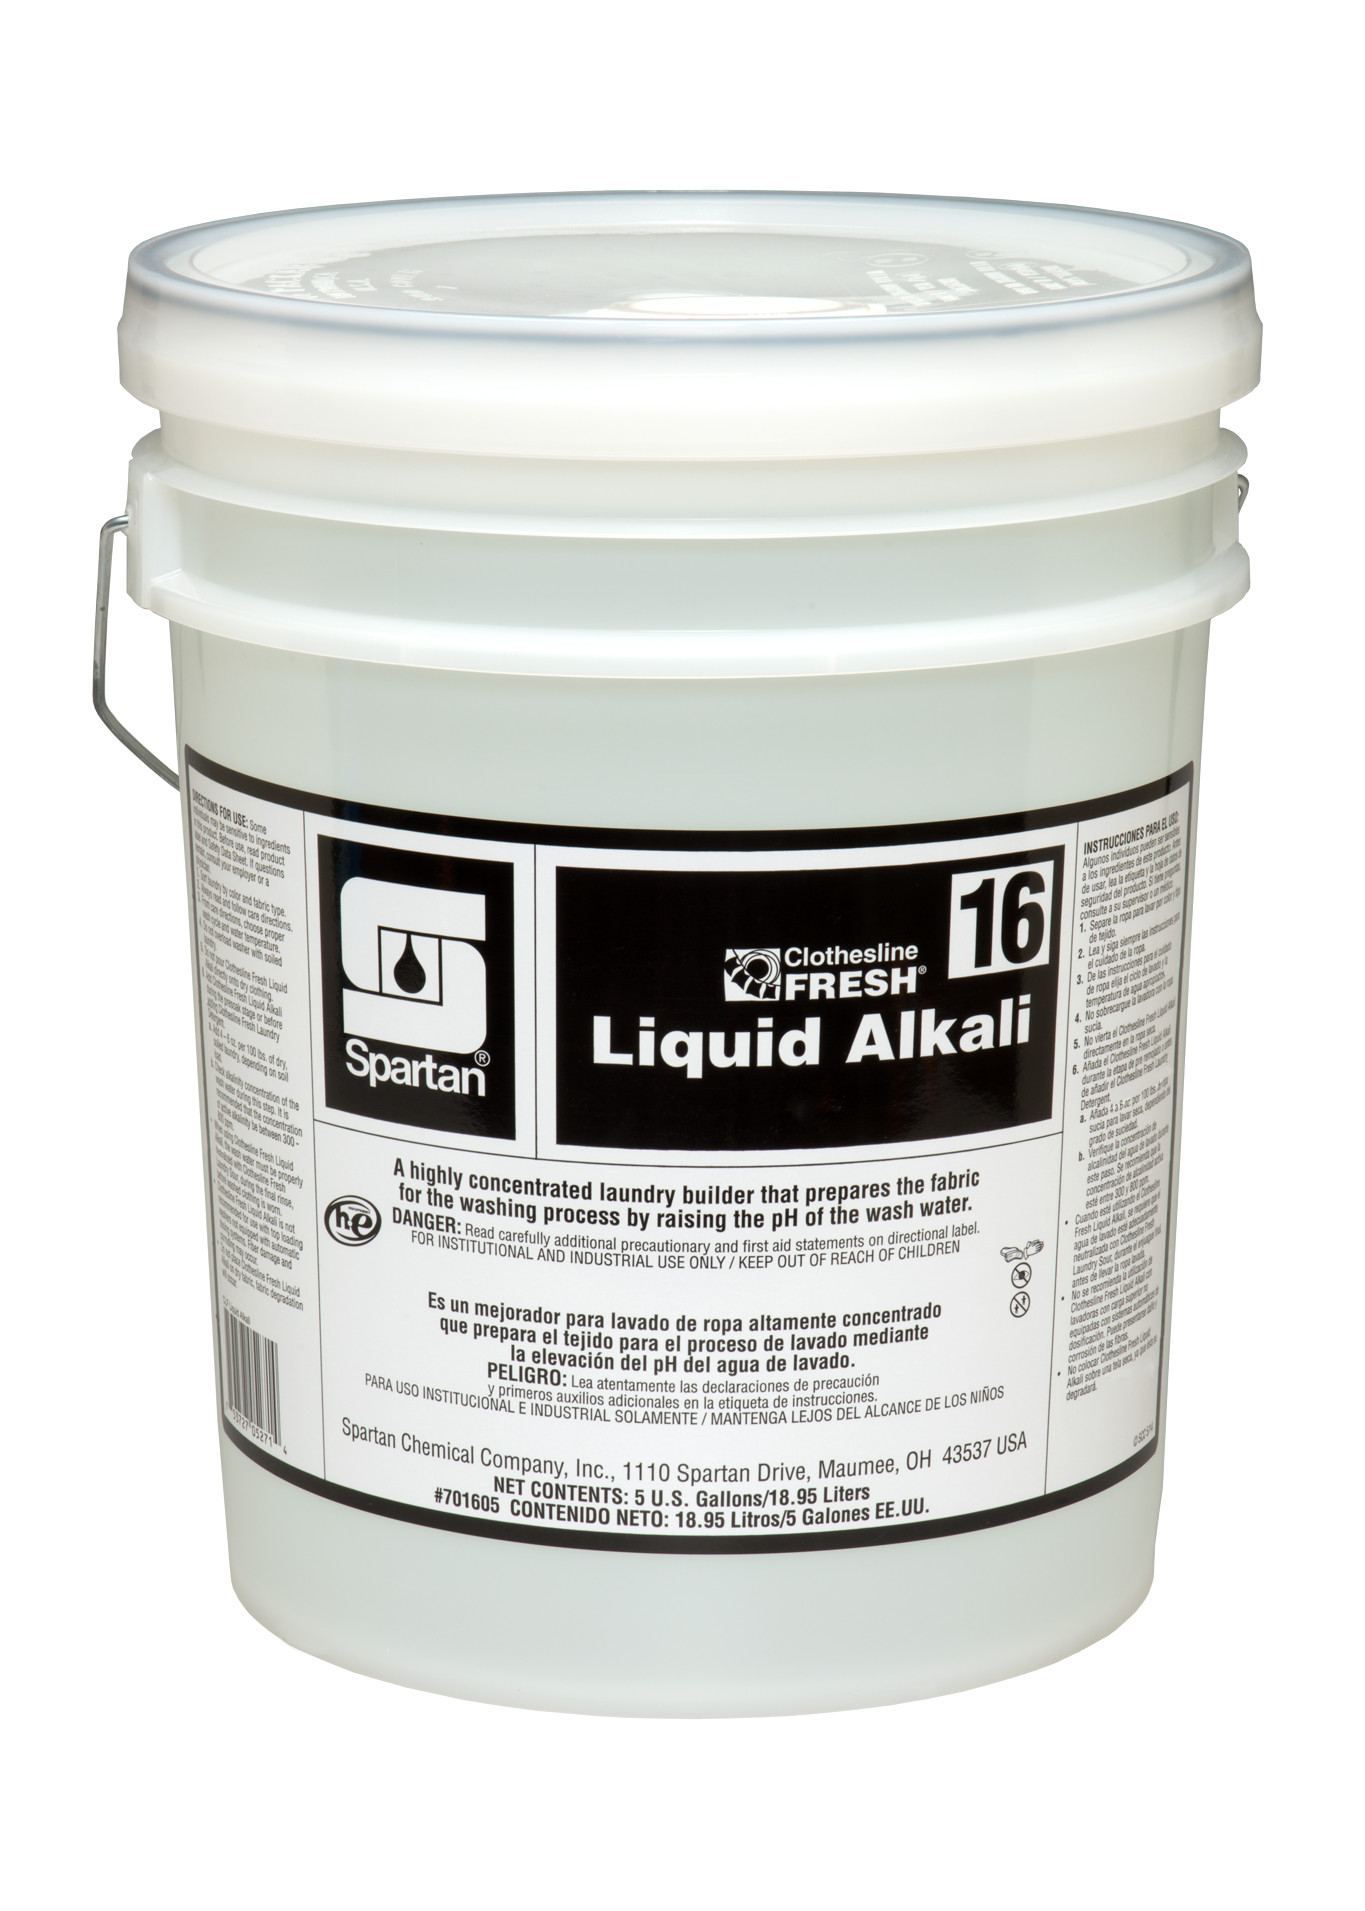 Spartan Chemical Company Clothesline Fresh Liquid Alkali 16, 5 GAL PAIL